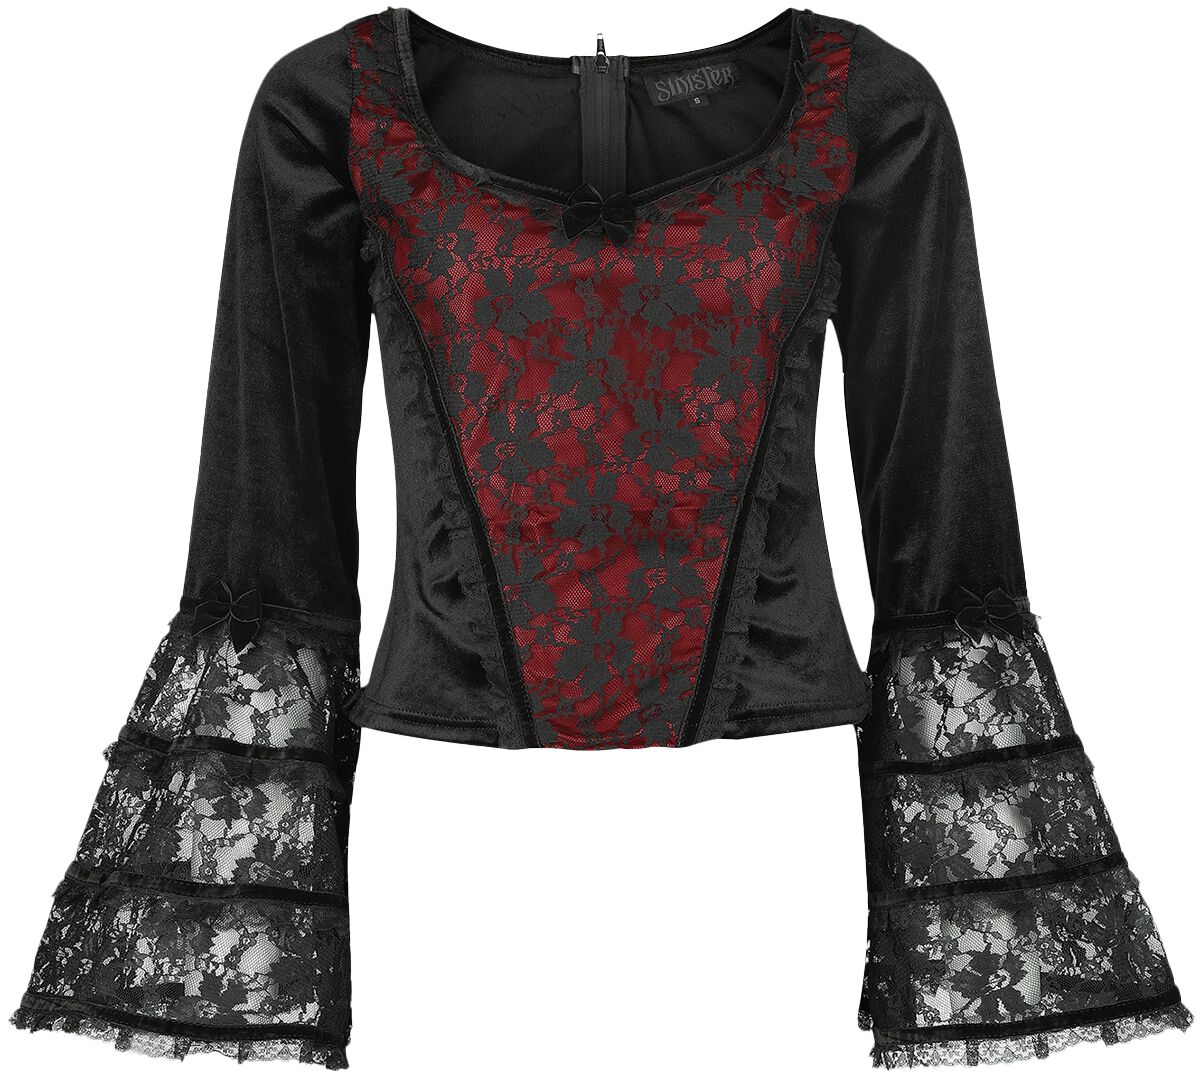 Sinister Gothic Gothic Longsleeve Langarmshirt schwarz rot in M